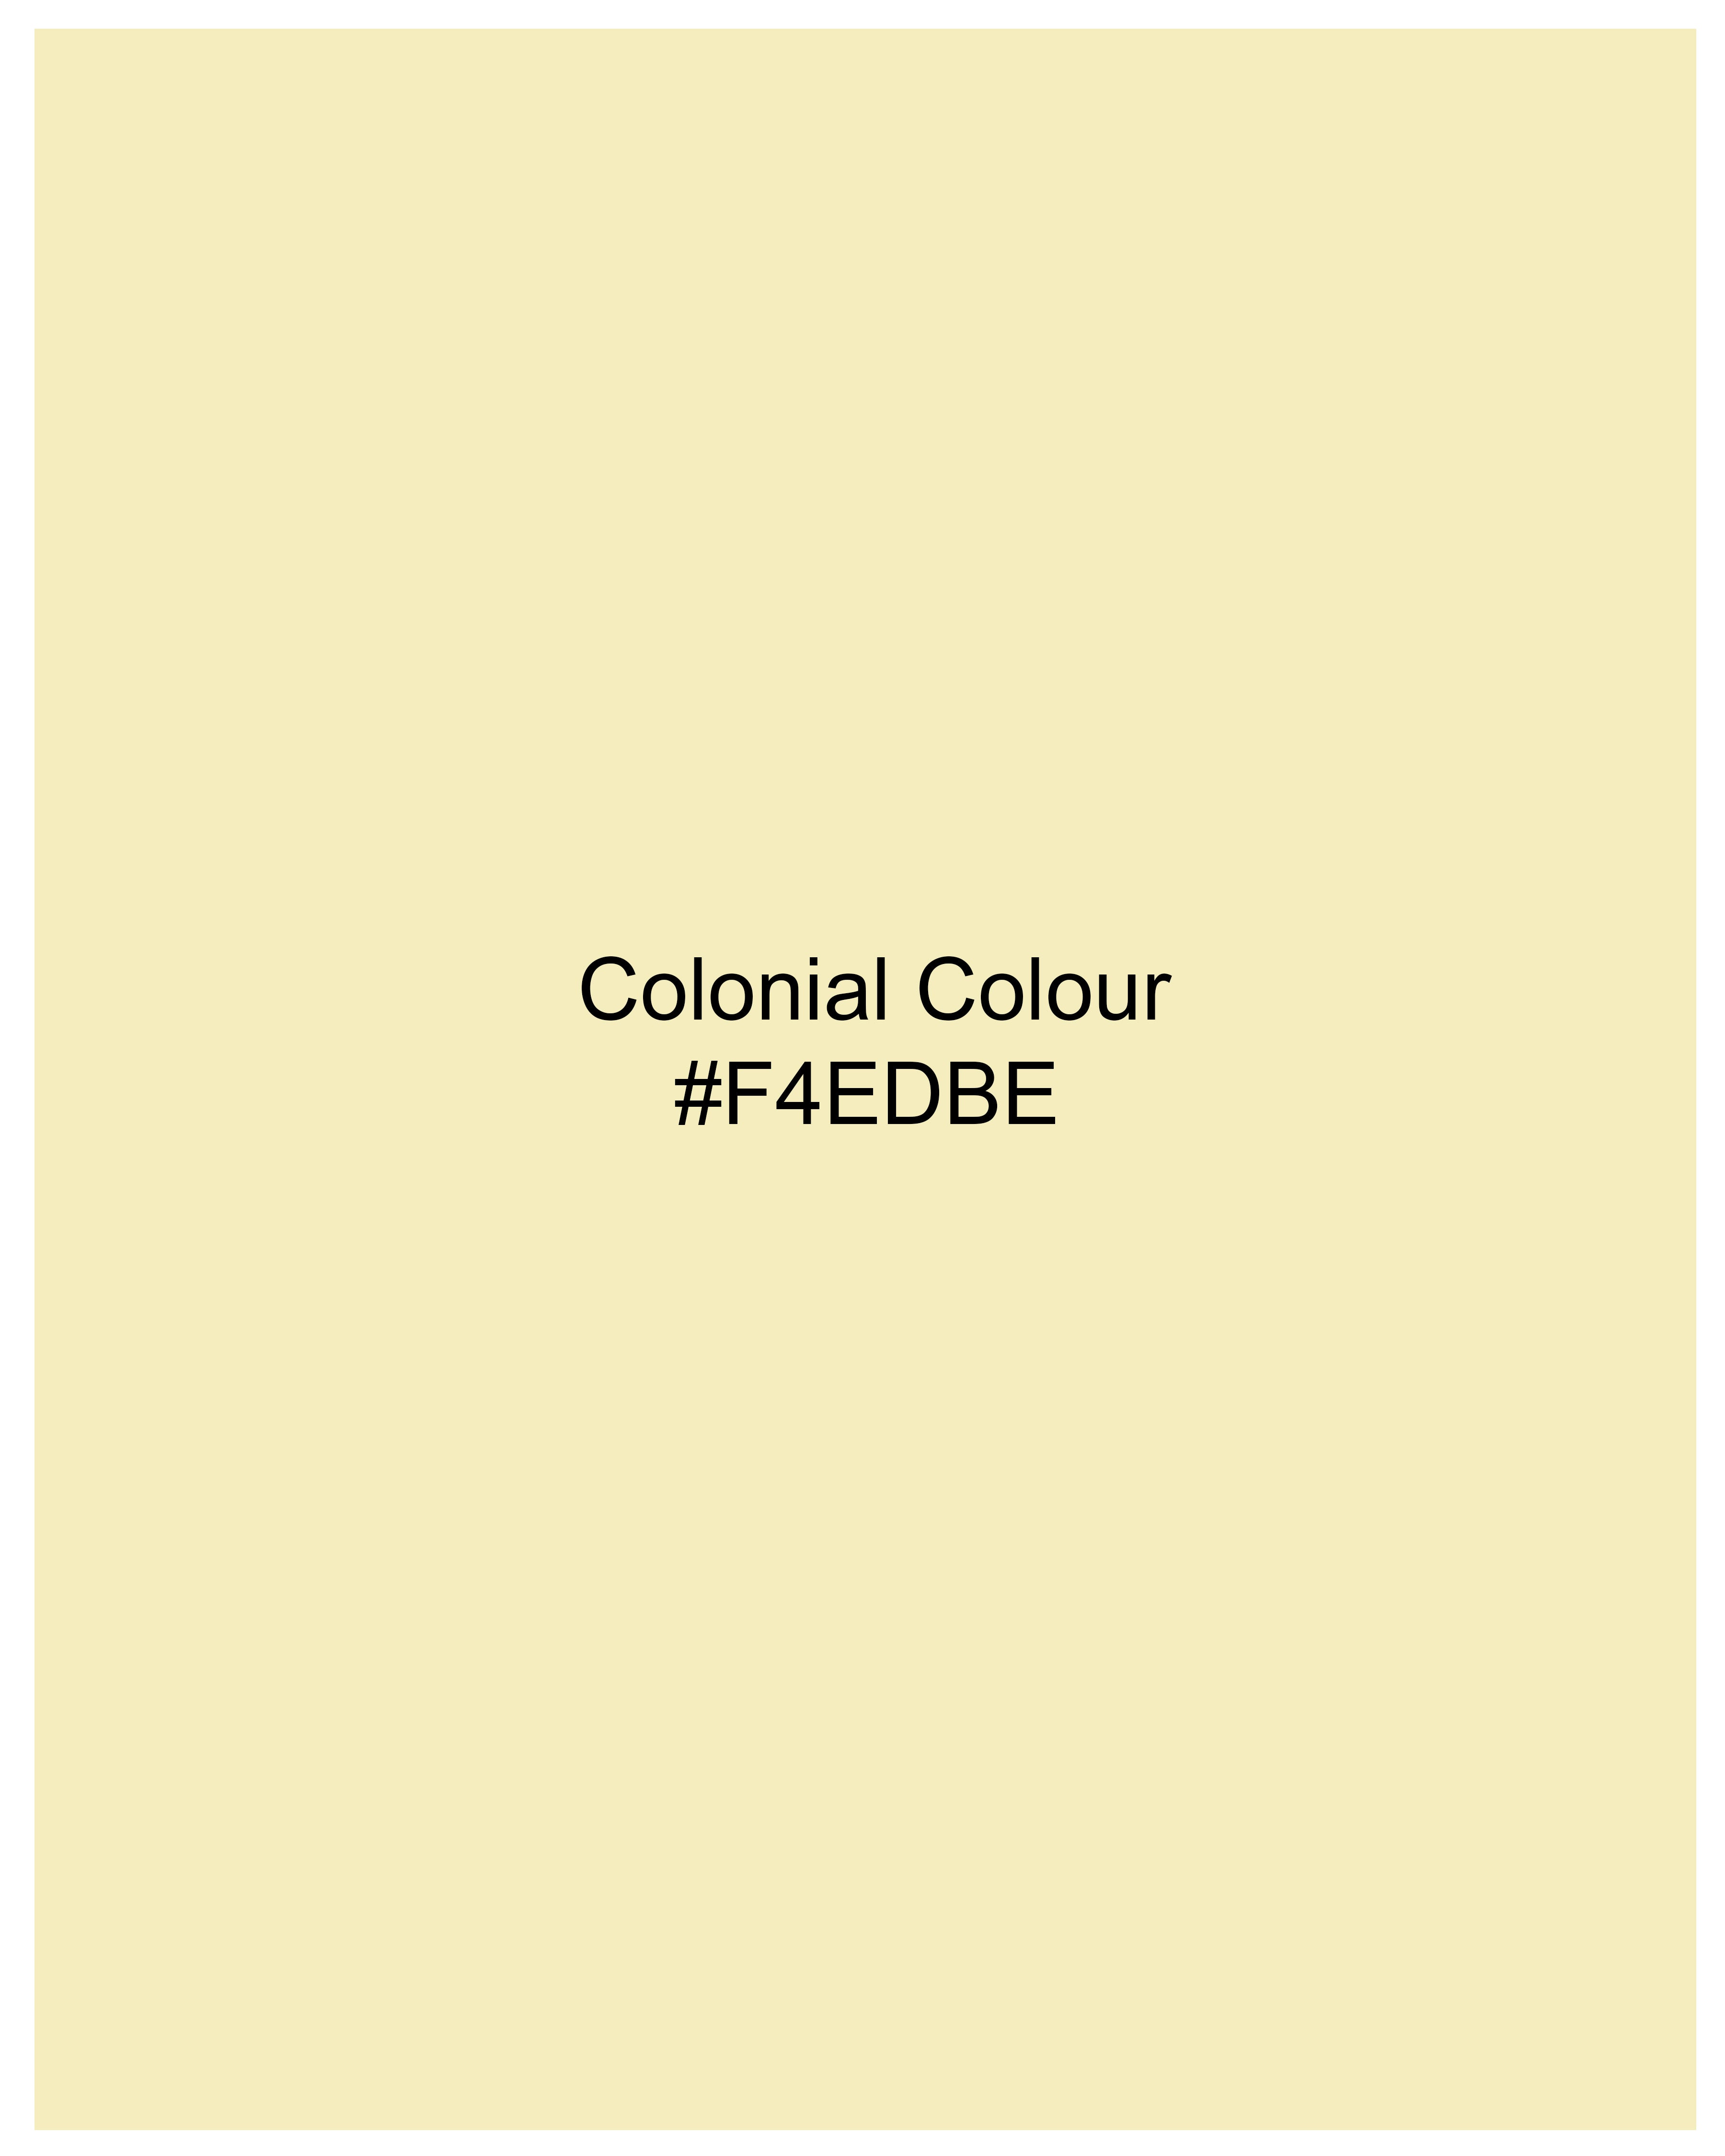 Colonial Yellow Full Sleeve Premium Cotton Heavyweight Sweatshirt 
TS617-C, TS617-M, TS617-L, TS617-XL, TS617-XXL, TS617-3XL, TS617-4XL